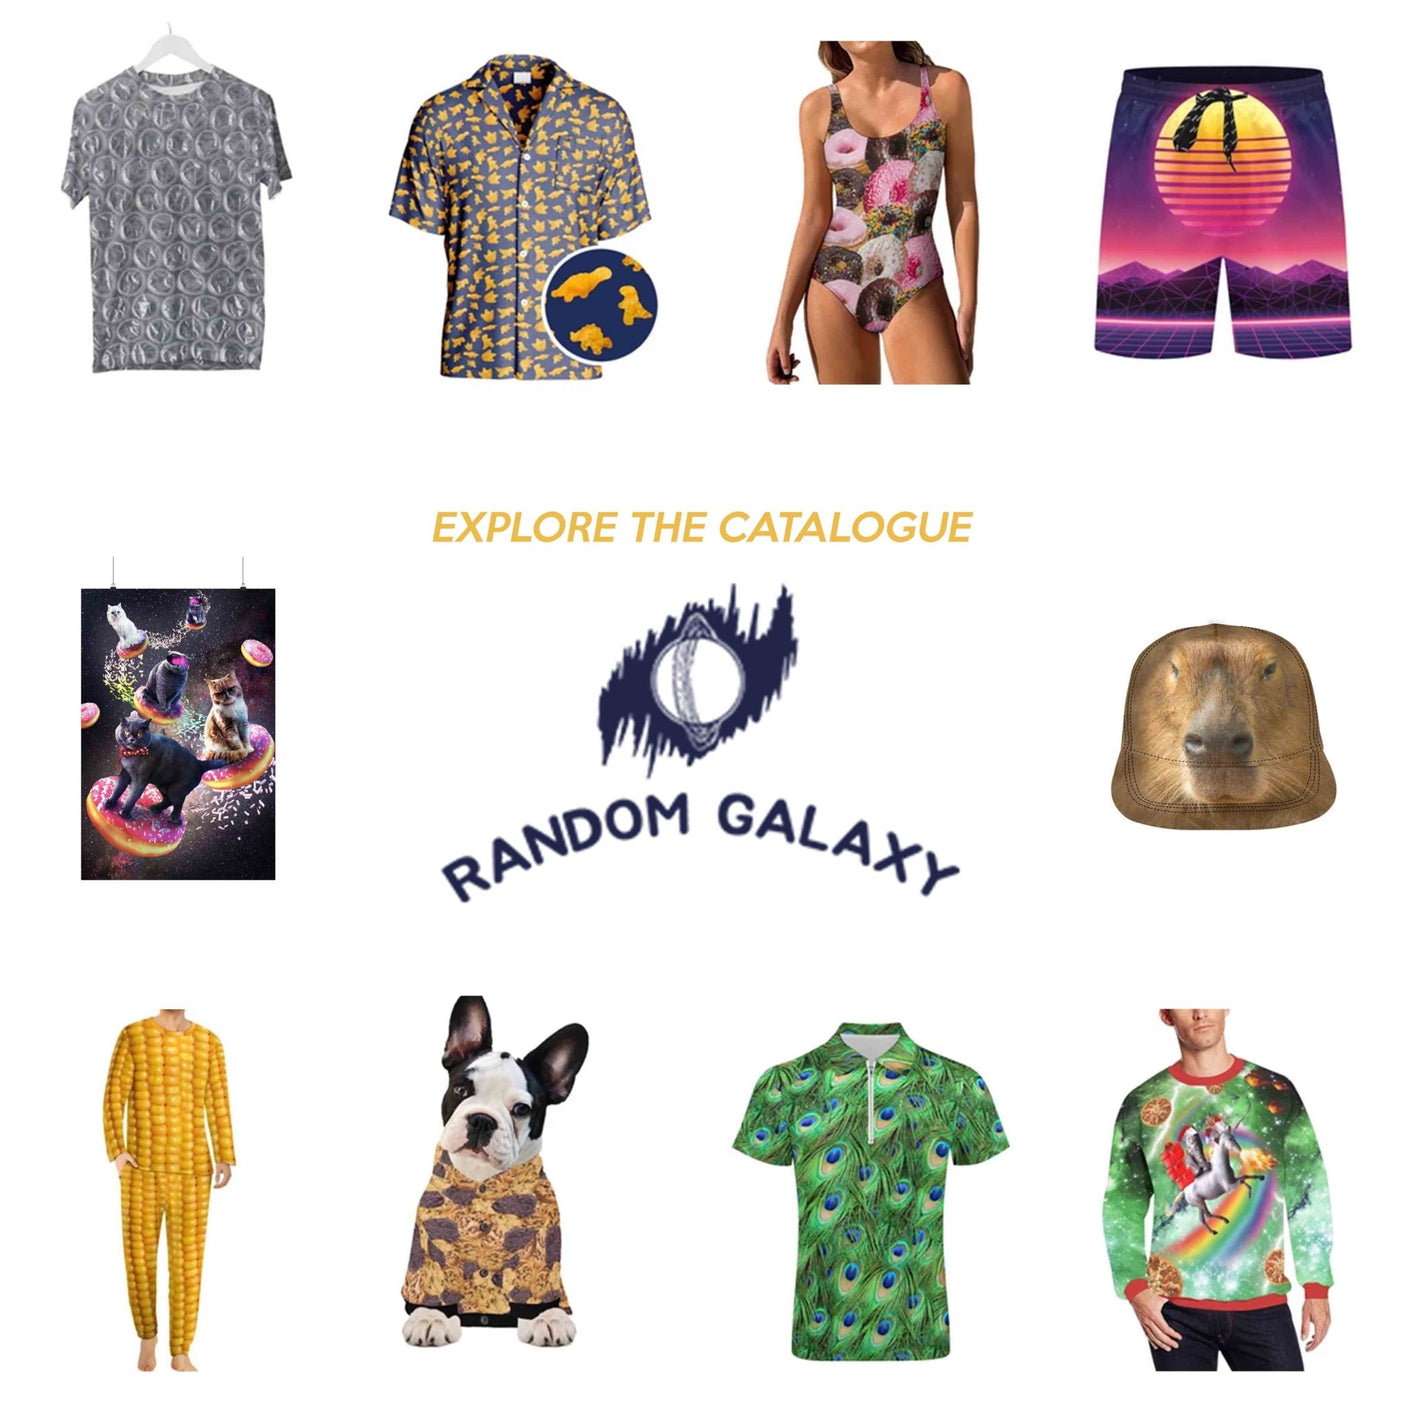 Arcade Floor Carpet Pattern Hawaiian Shirt | Button Up Down Shirt - Random Galaxy